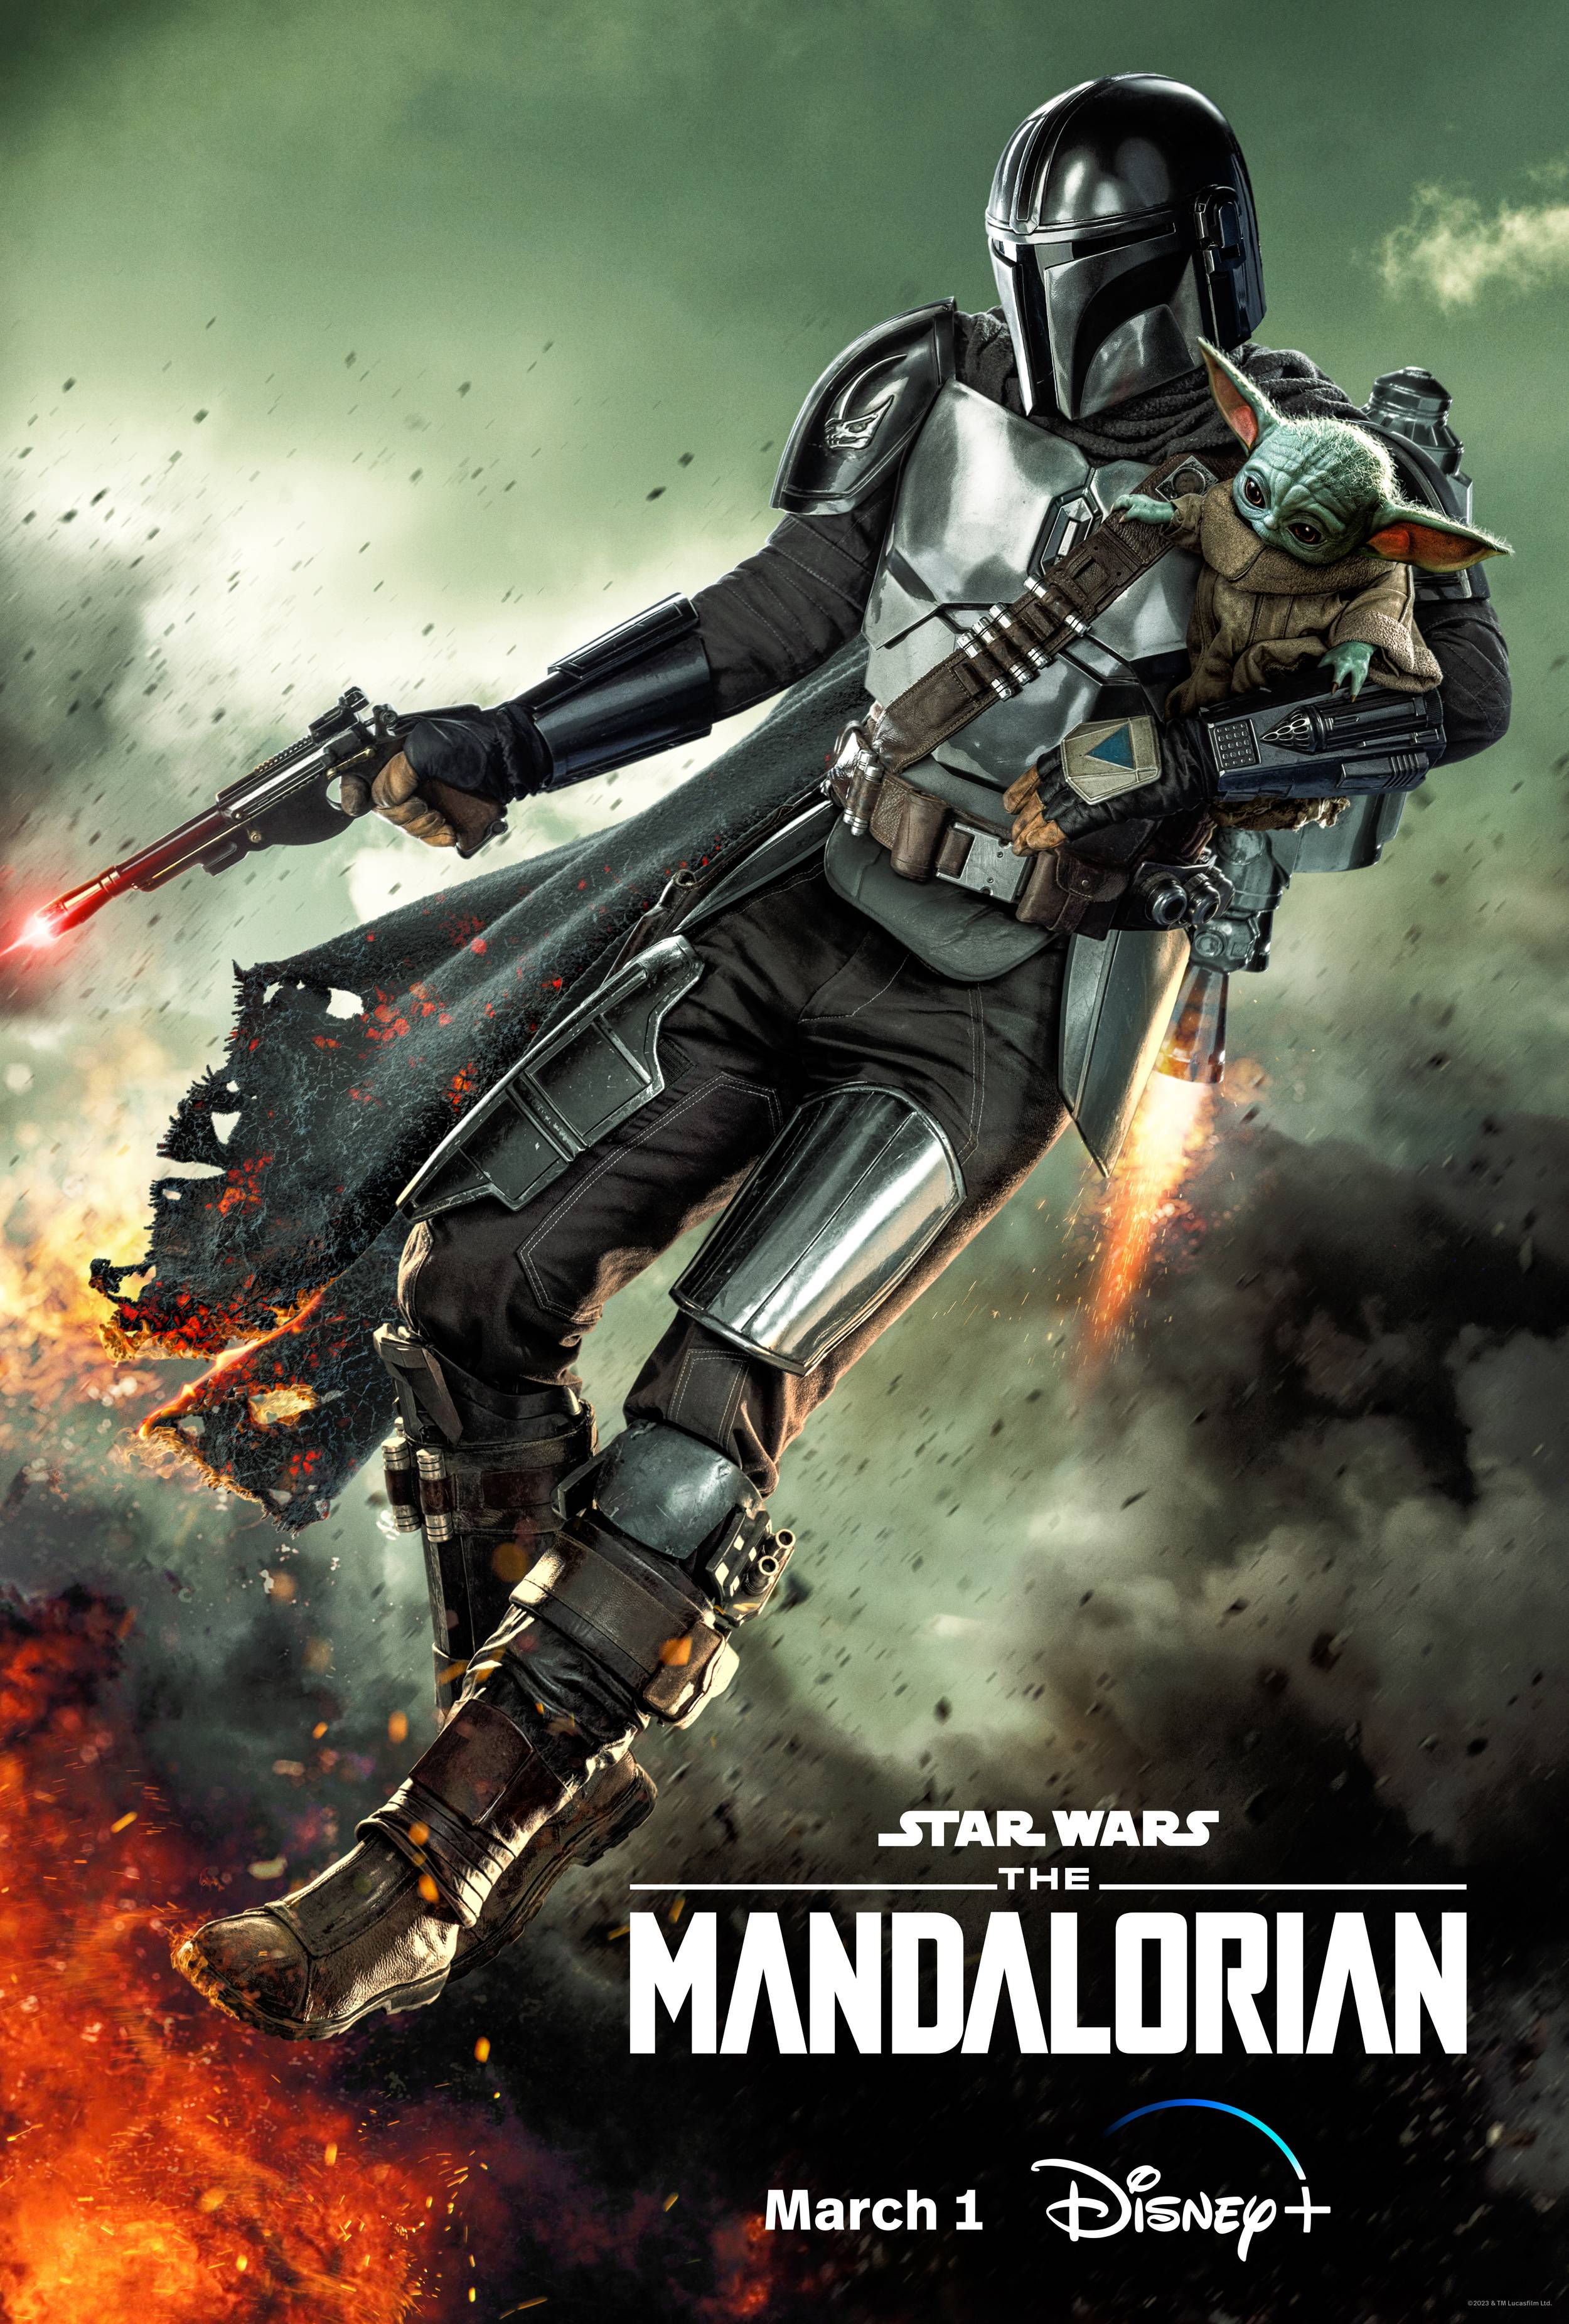 Season 3 Of 'Star Wars: The Mandalorian'